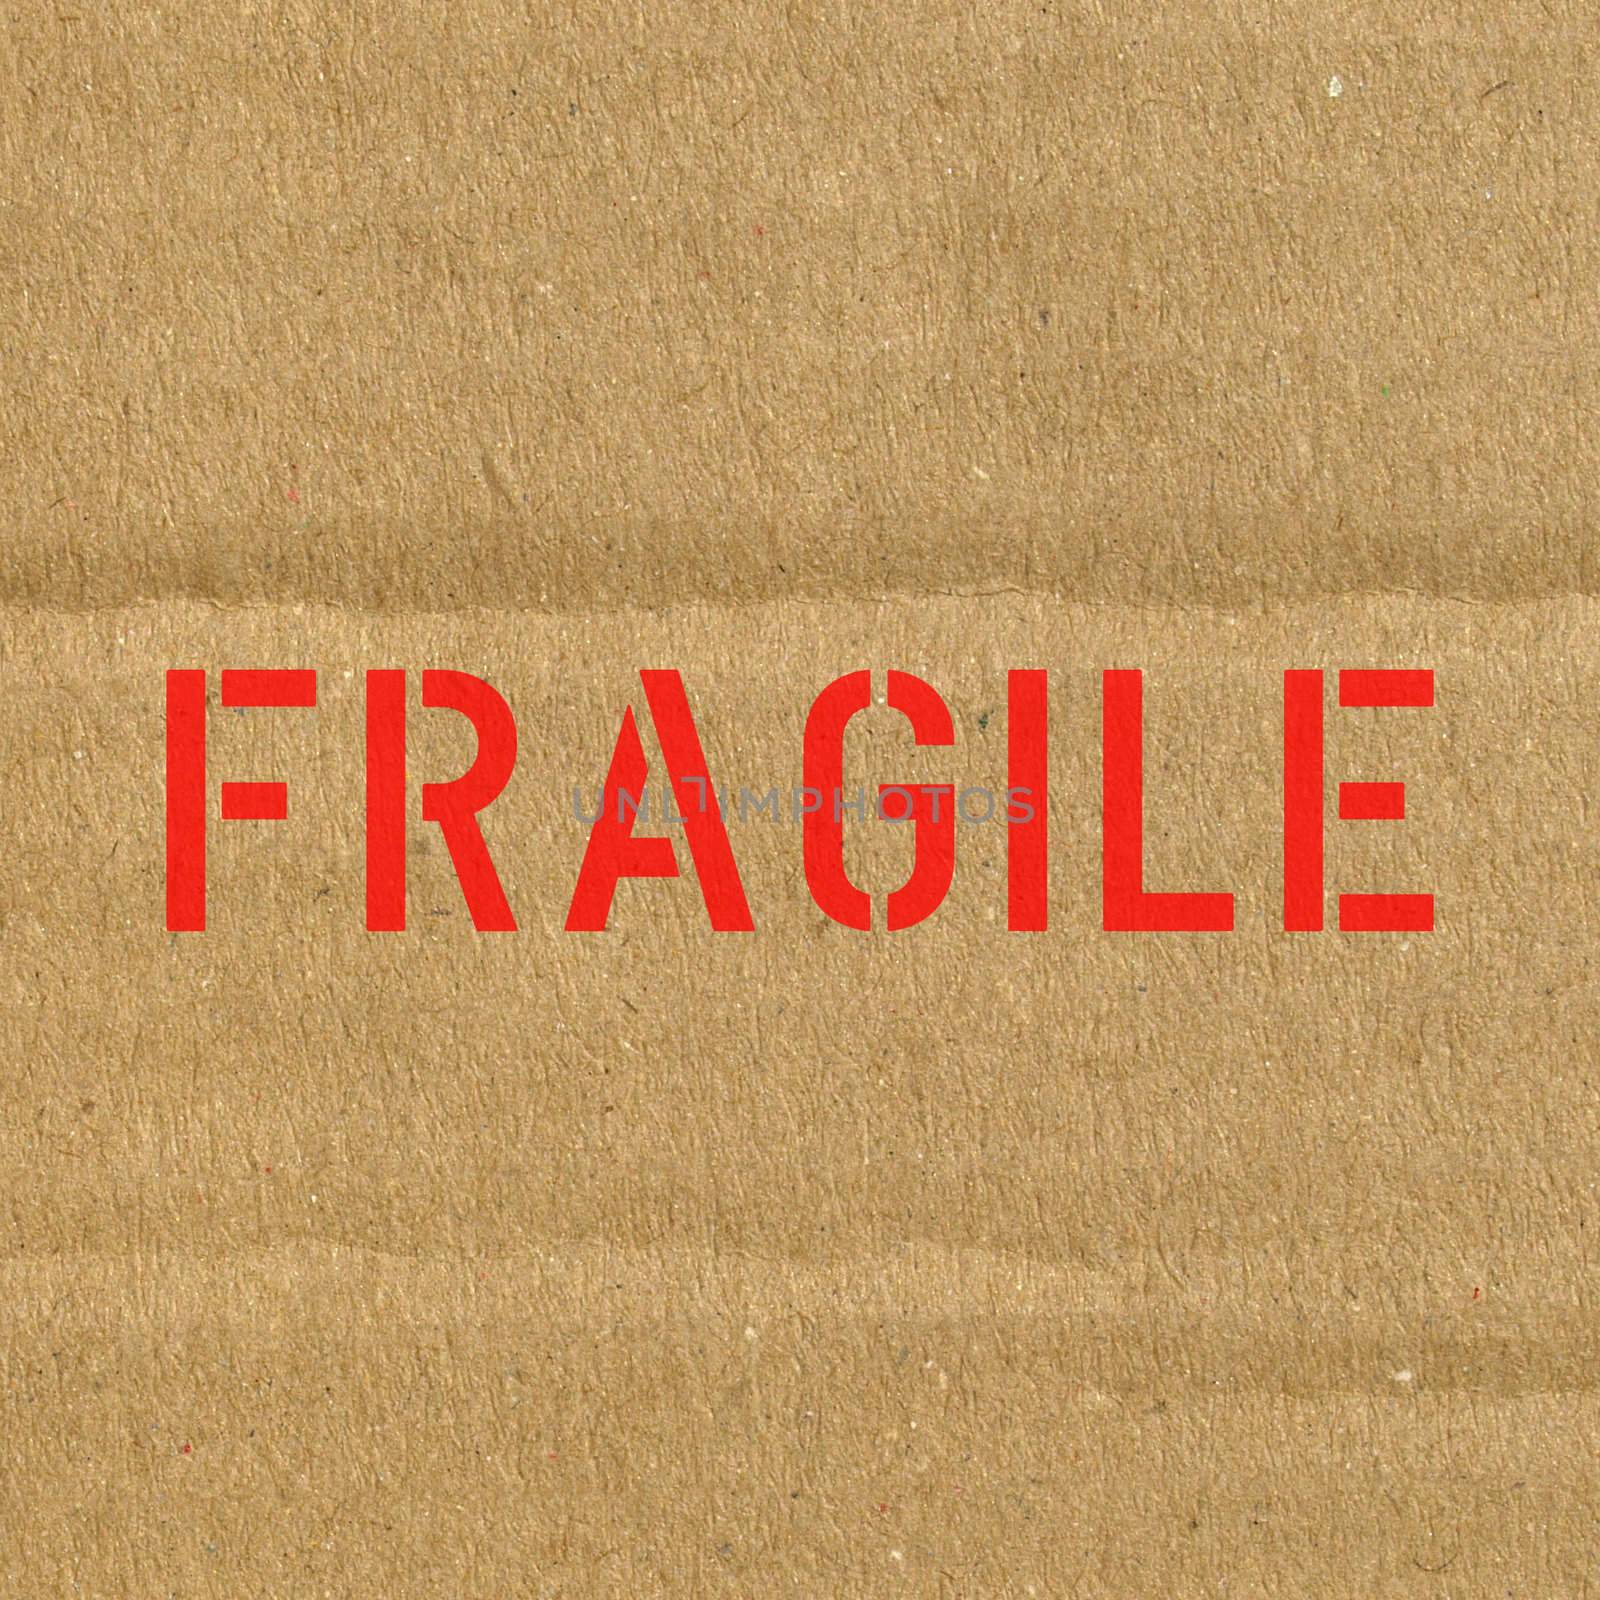 Fragile by claudiodivizia